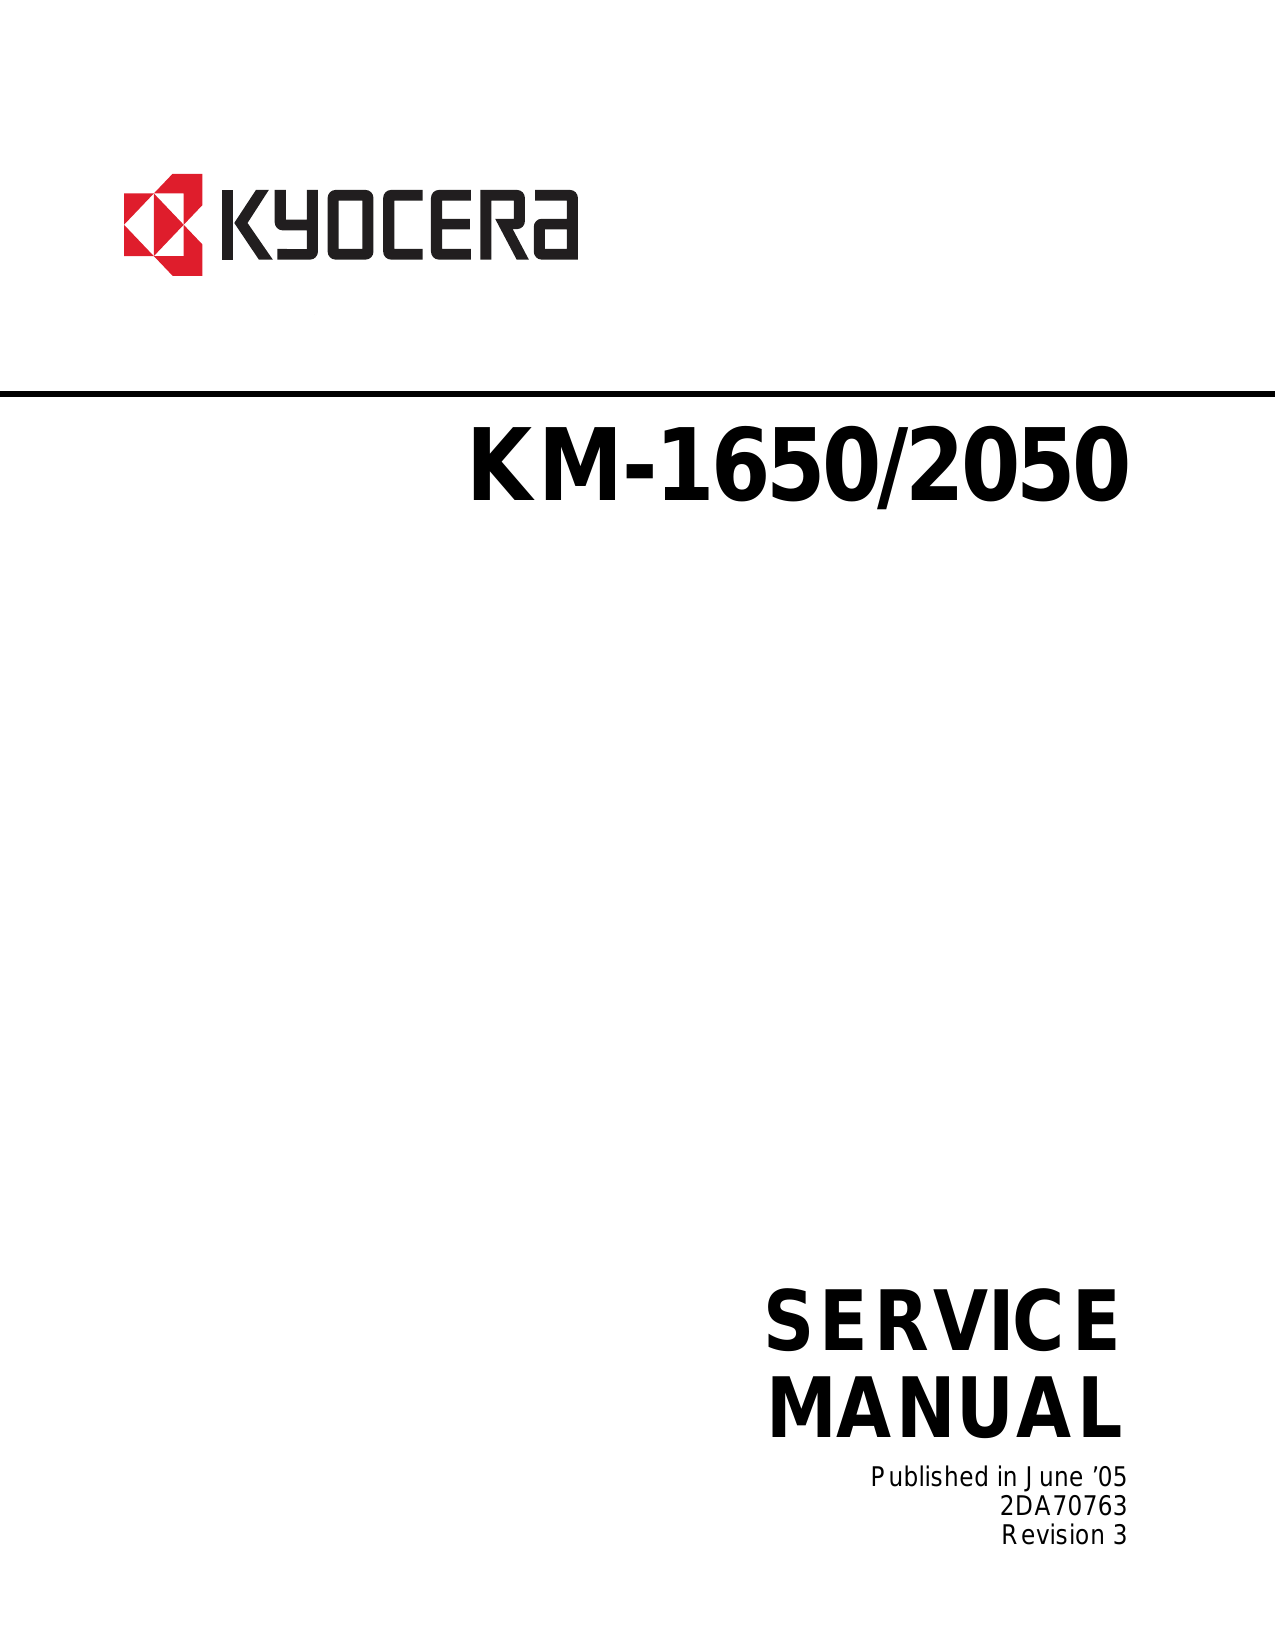 Kyocera KM-1650, KM-2050 service guide Preview image 6